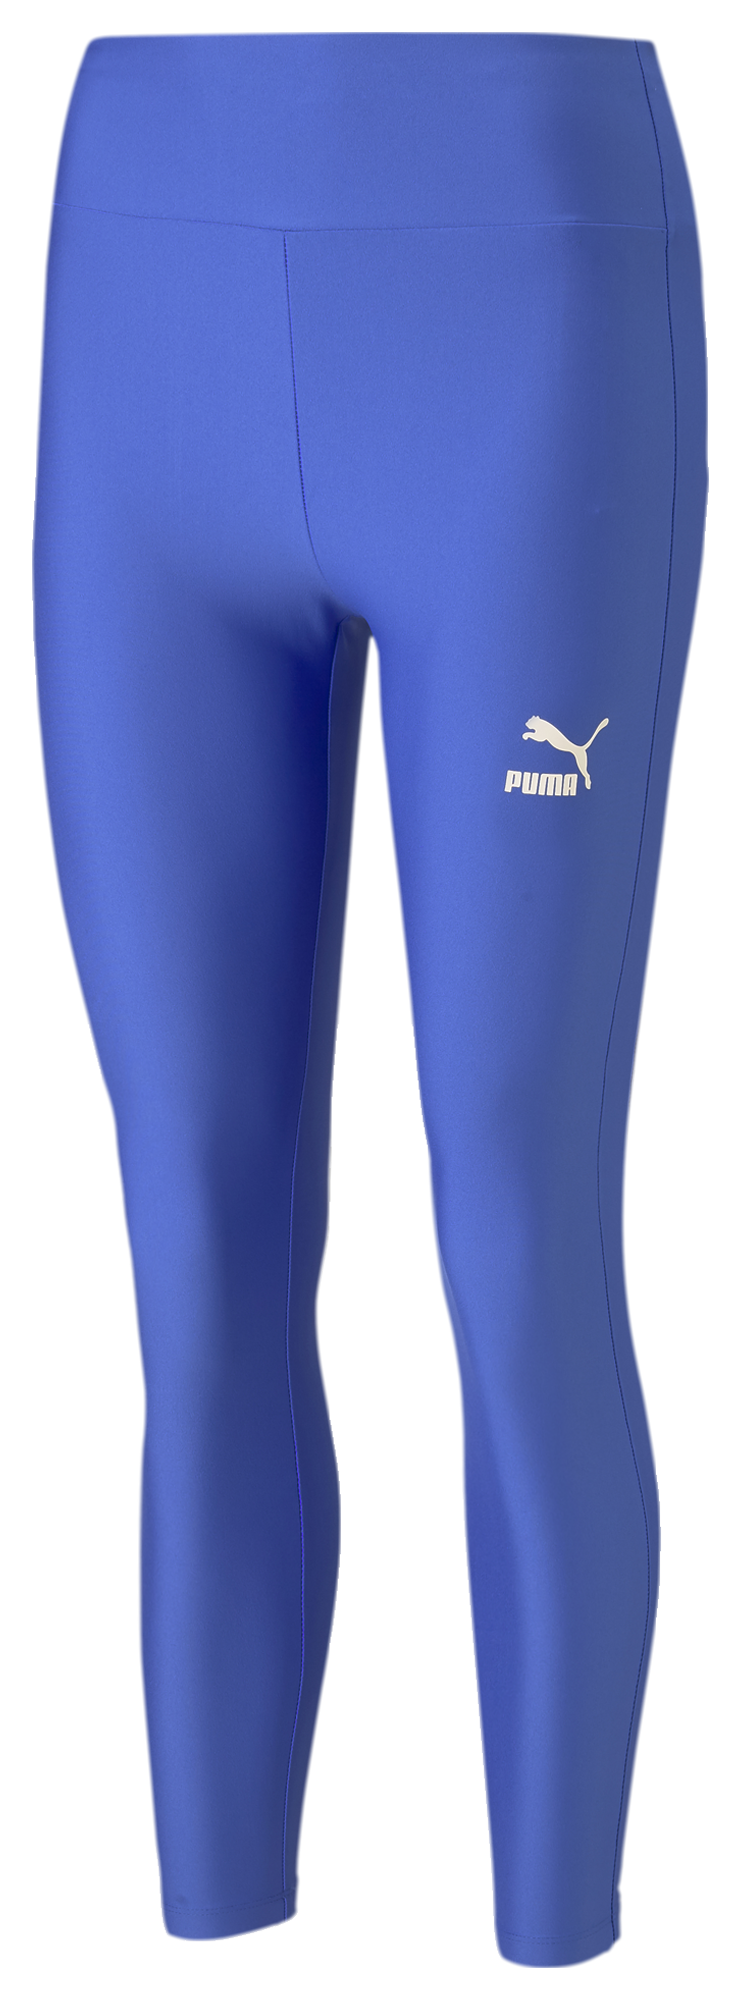 Puma Iconic T7 Mr Leggings Black) Women's Shorts - ShopStyle